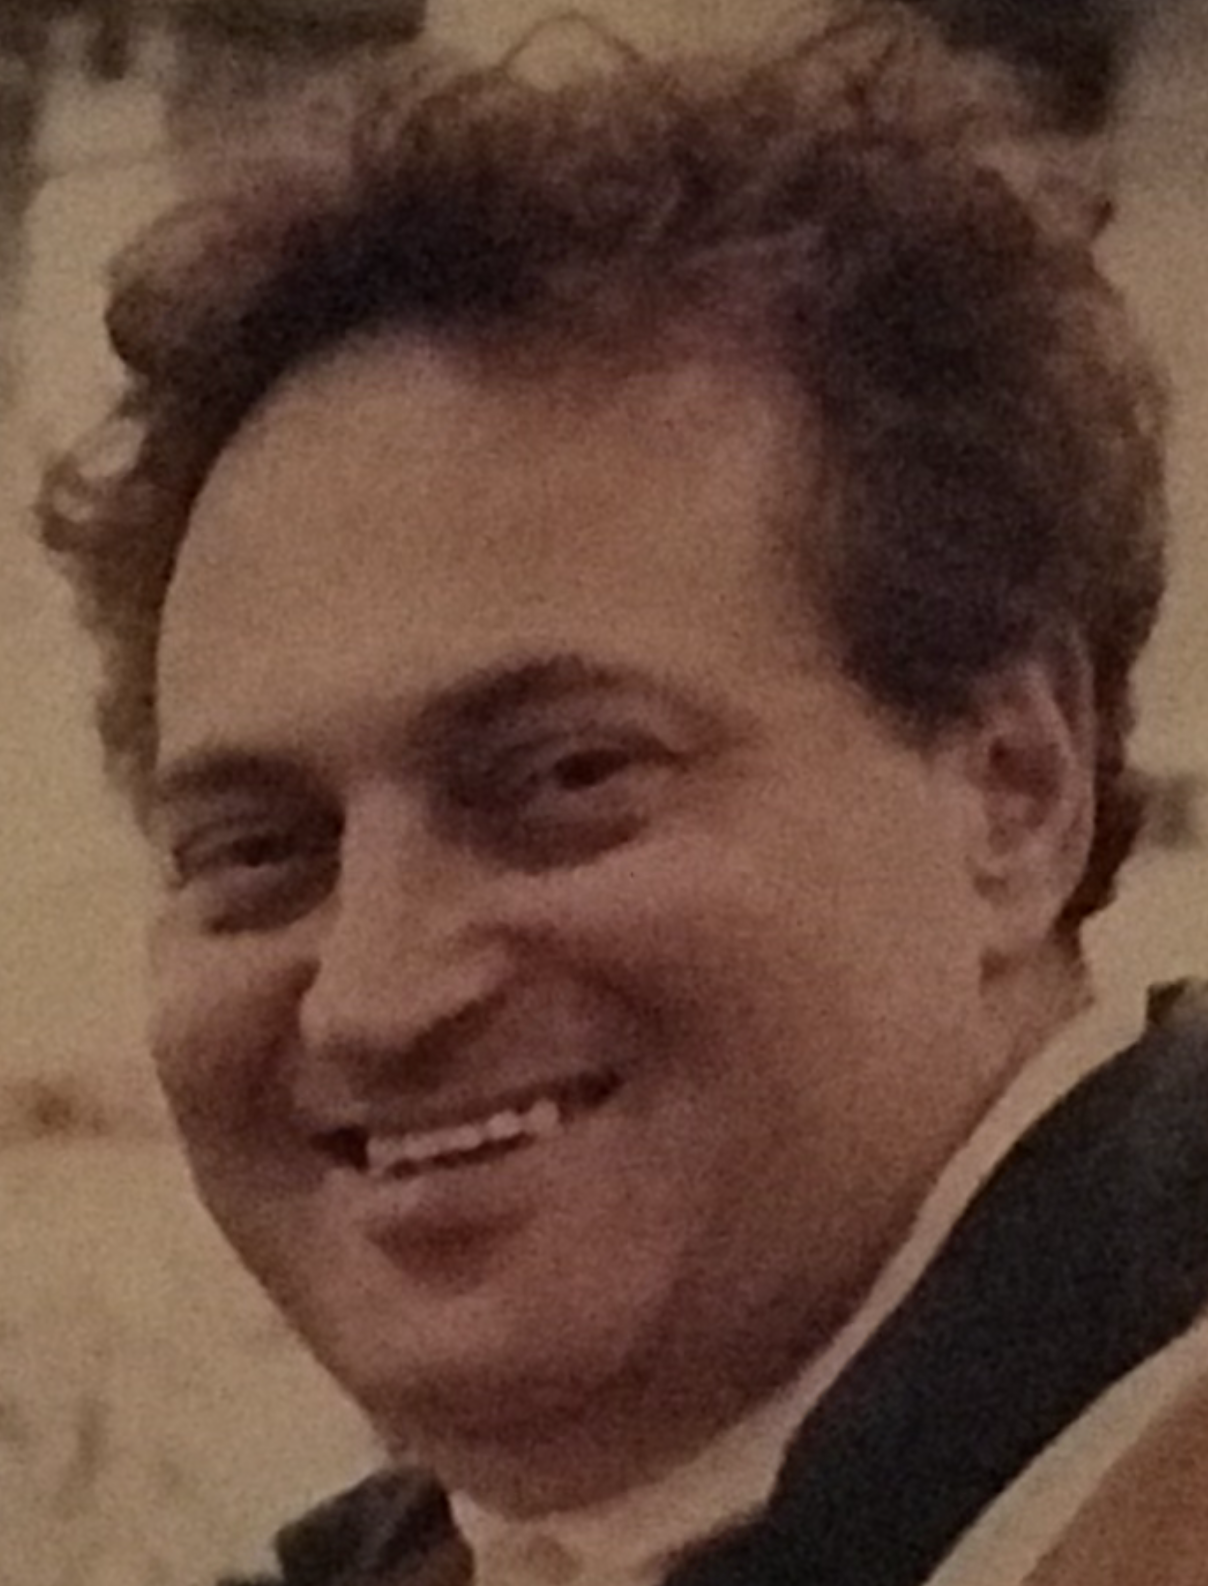 Joseph Pergolizzi